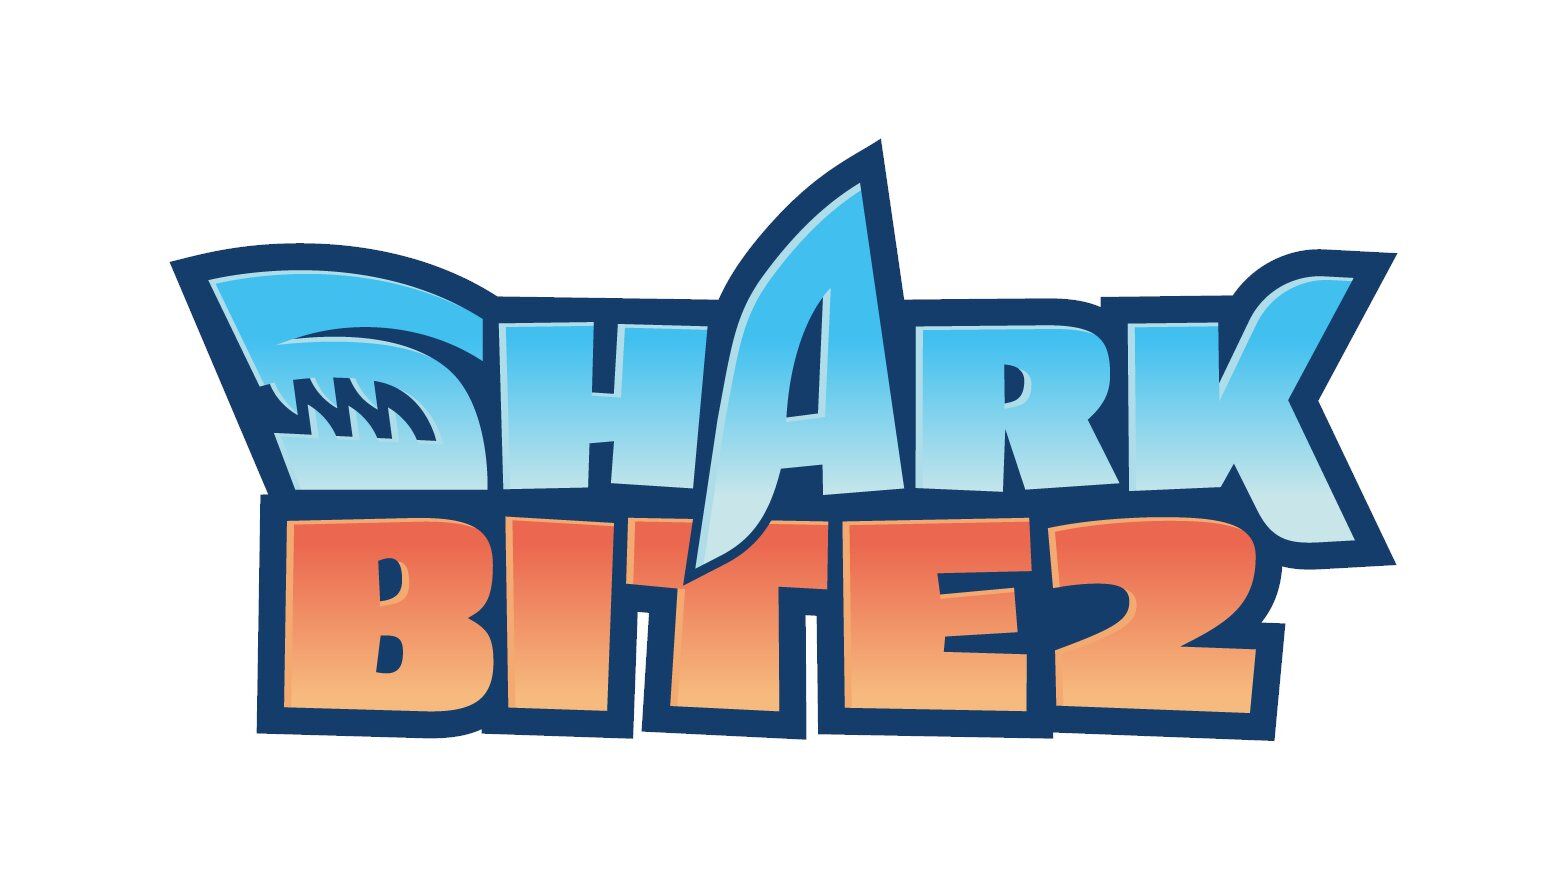 Sports & Outdoor Play  Nerf Kids Roblox Sharkbite: Web Launcher Rocker  Blaster, Includes Code To Redeem Exclusive Virtual Item, 2 Rockets - La  toque noire